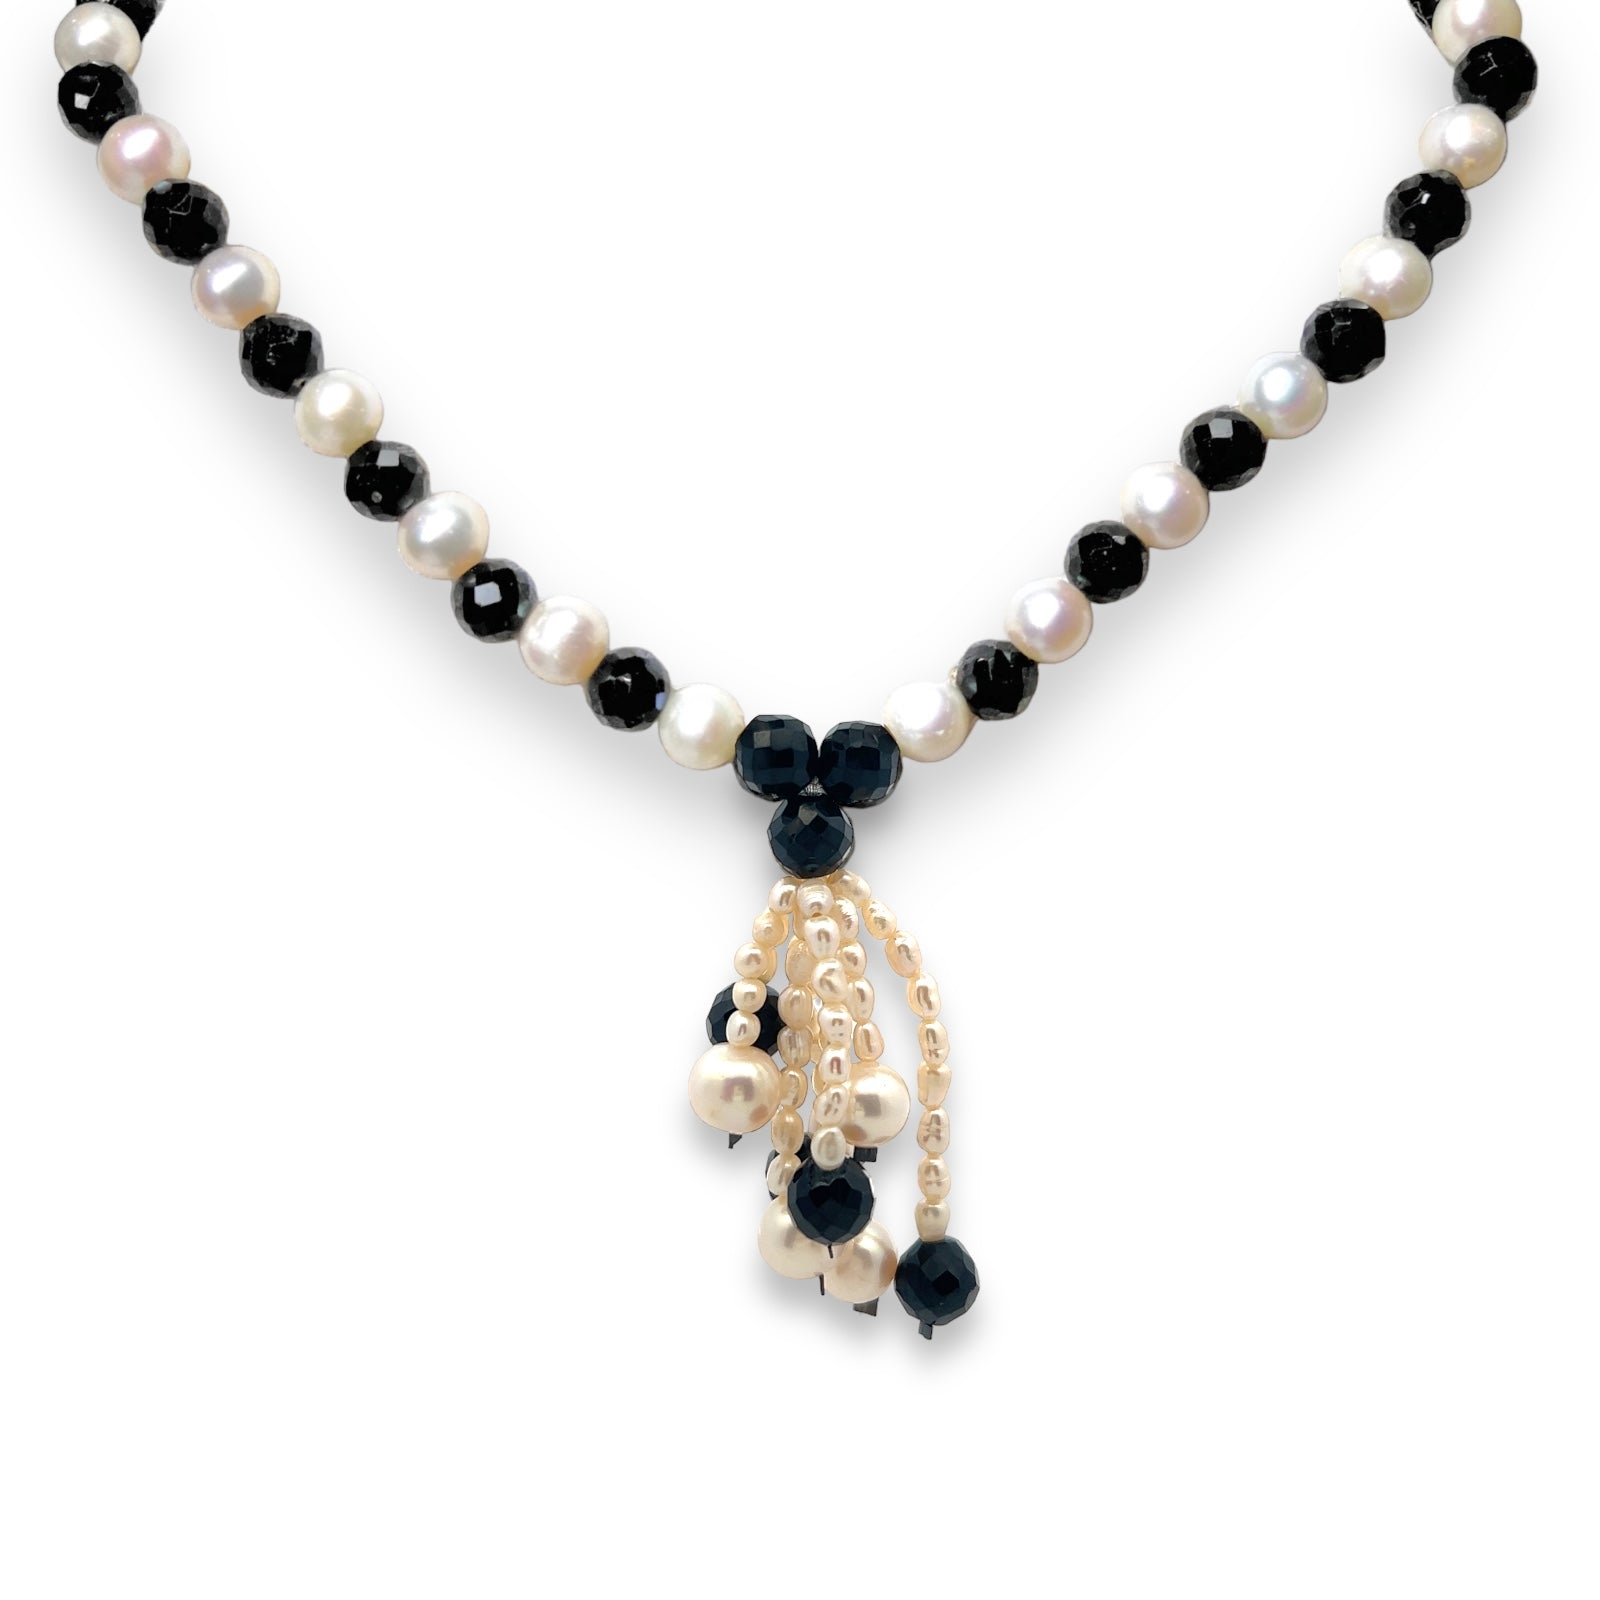 Natural Handmade Necklace 16"-18" Black Tourmaline Pearls Gemstone Beads Jewelry